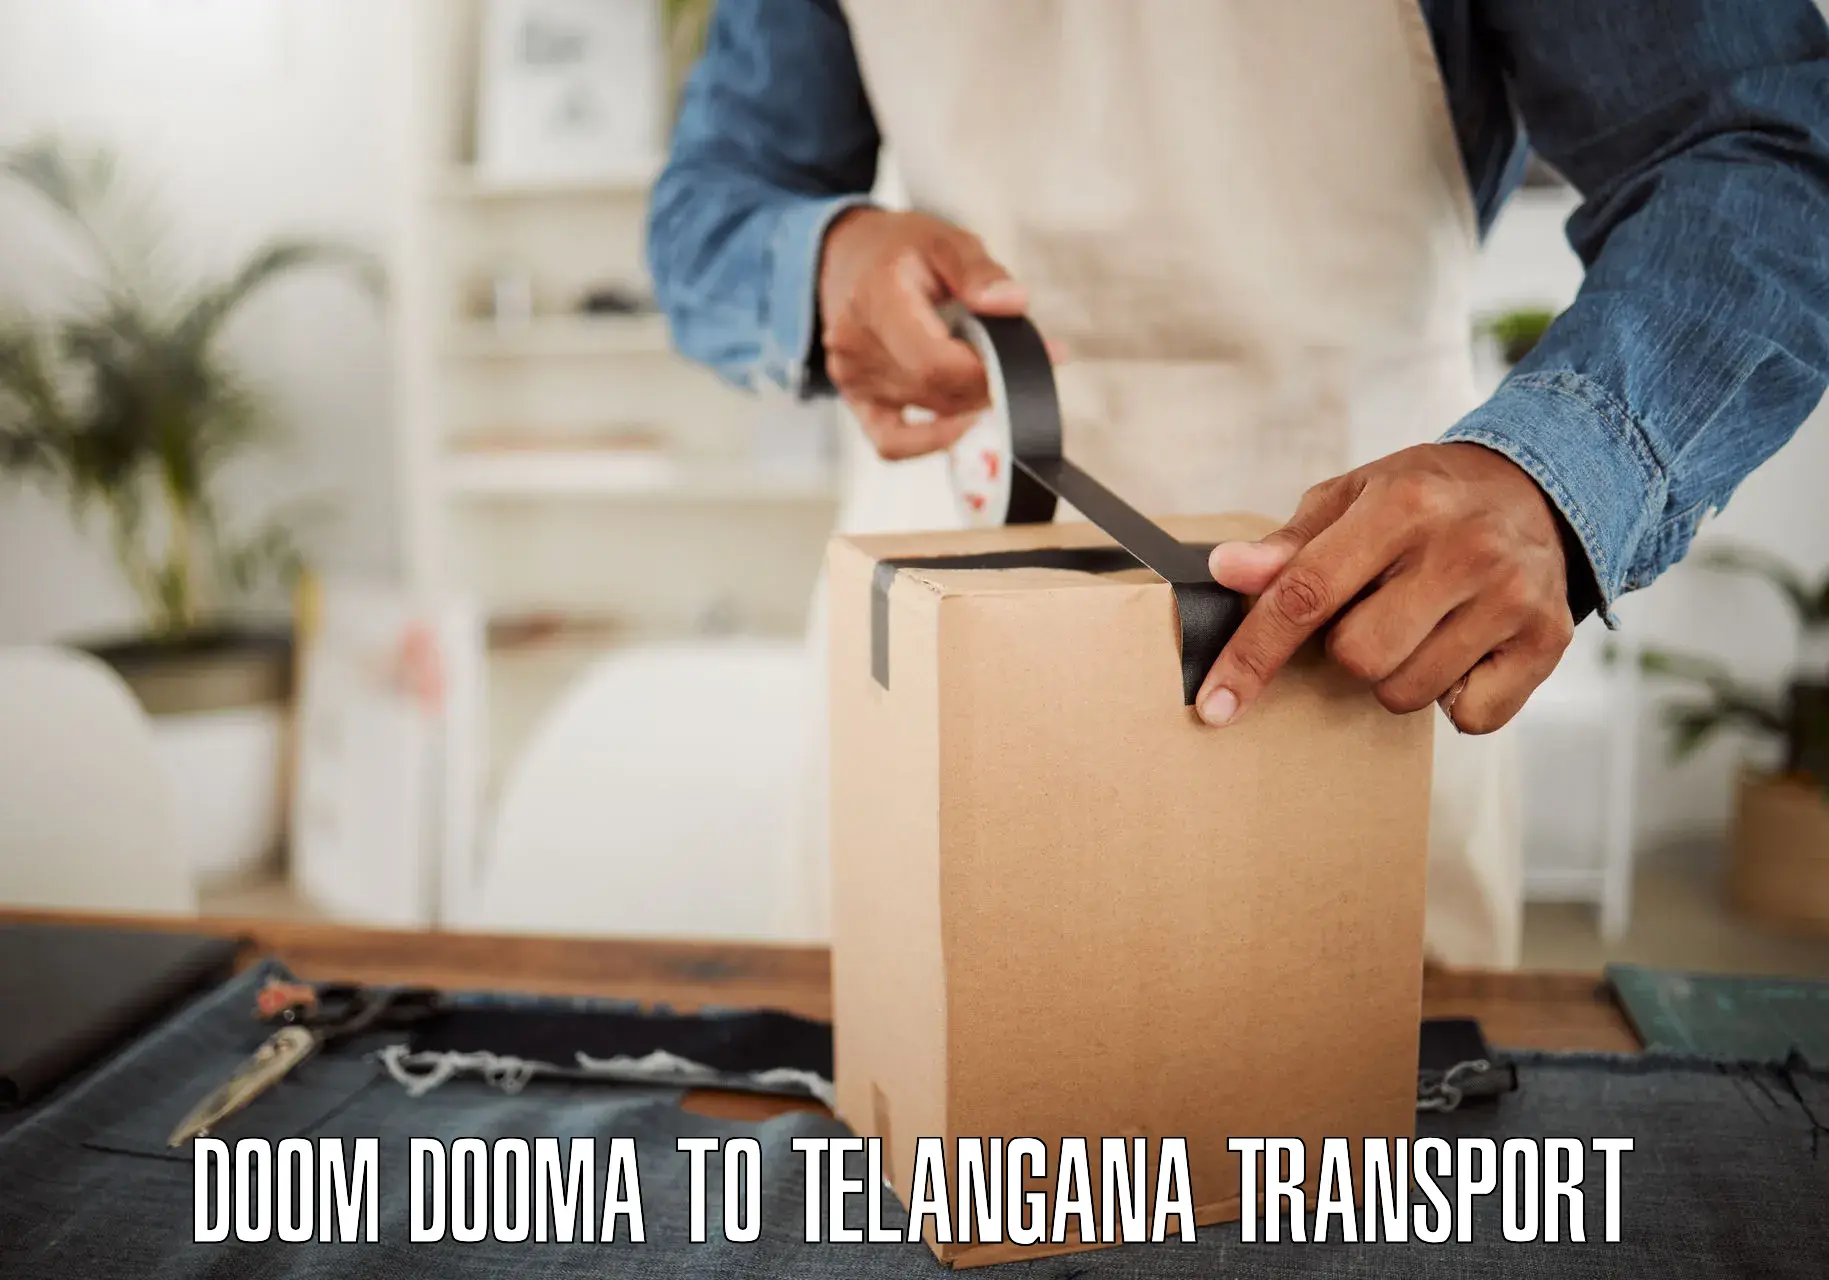 Transport in sharing Doom Dooma to Bhupalpally